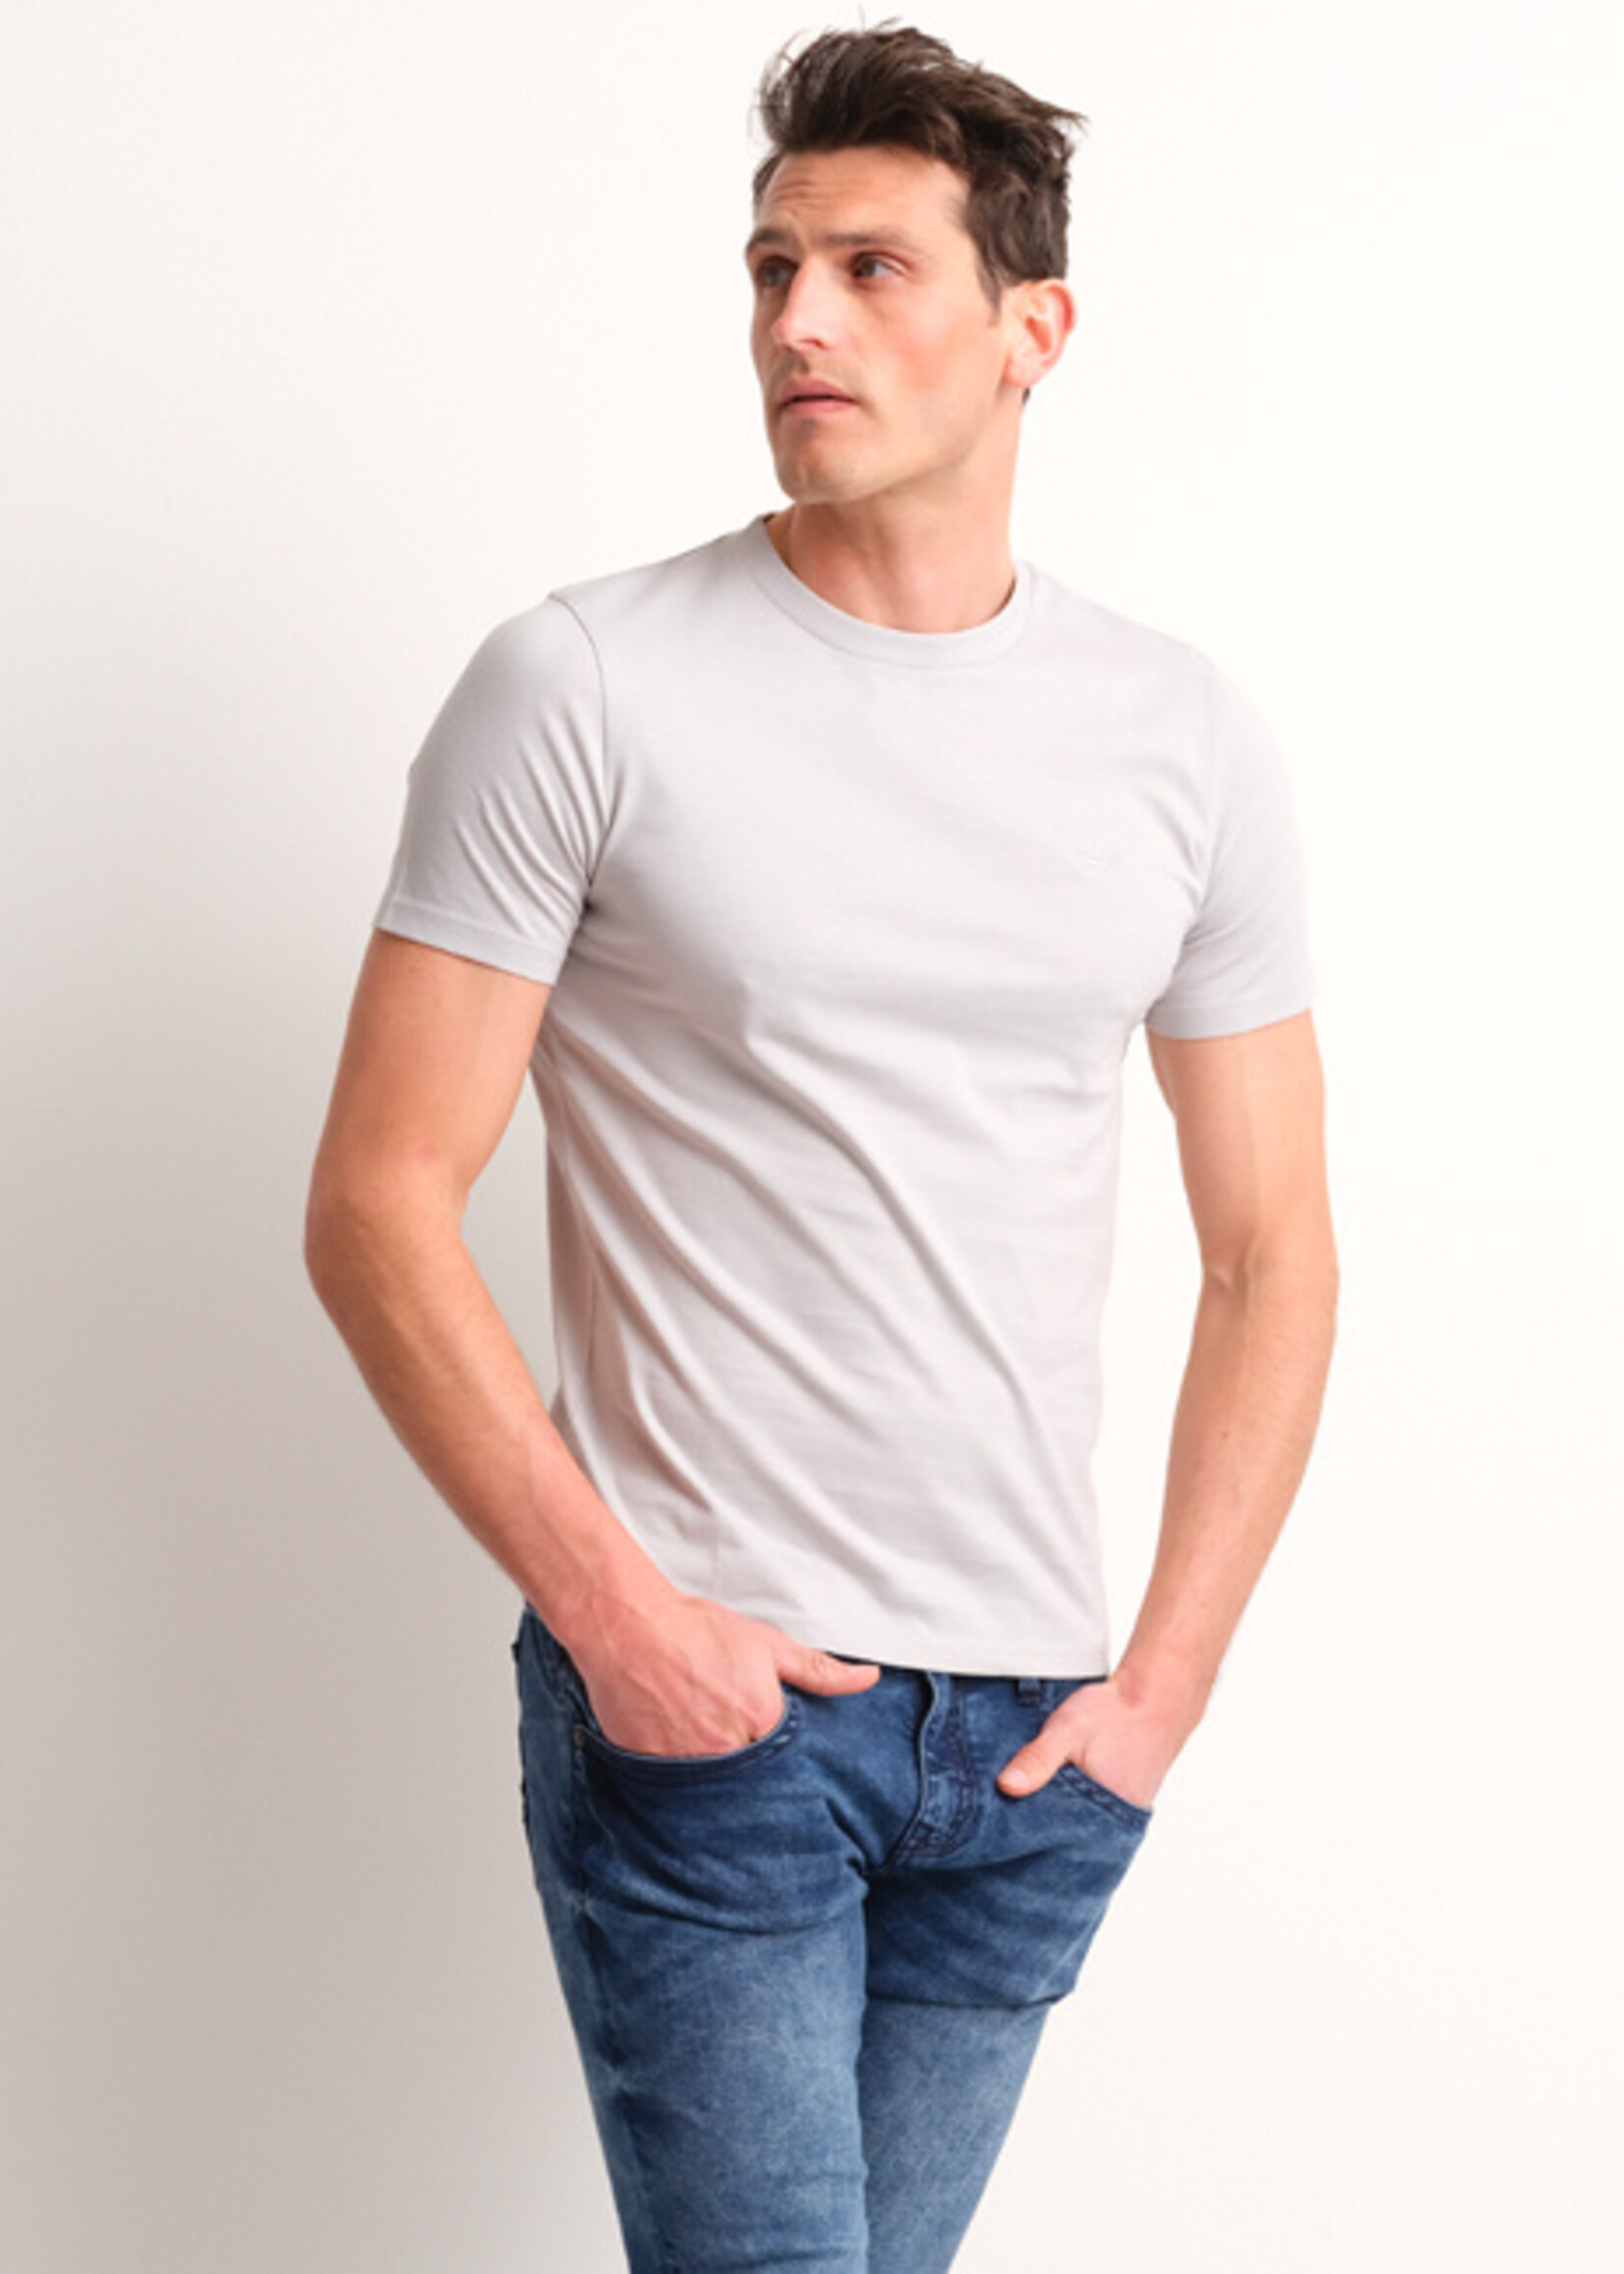 Comodo Shirts Light grey t-shirt